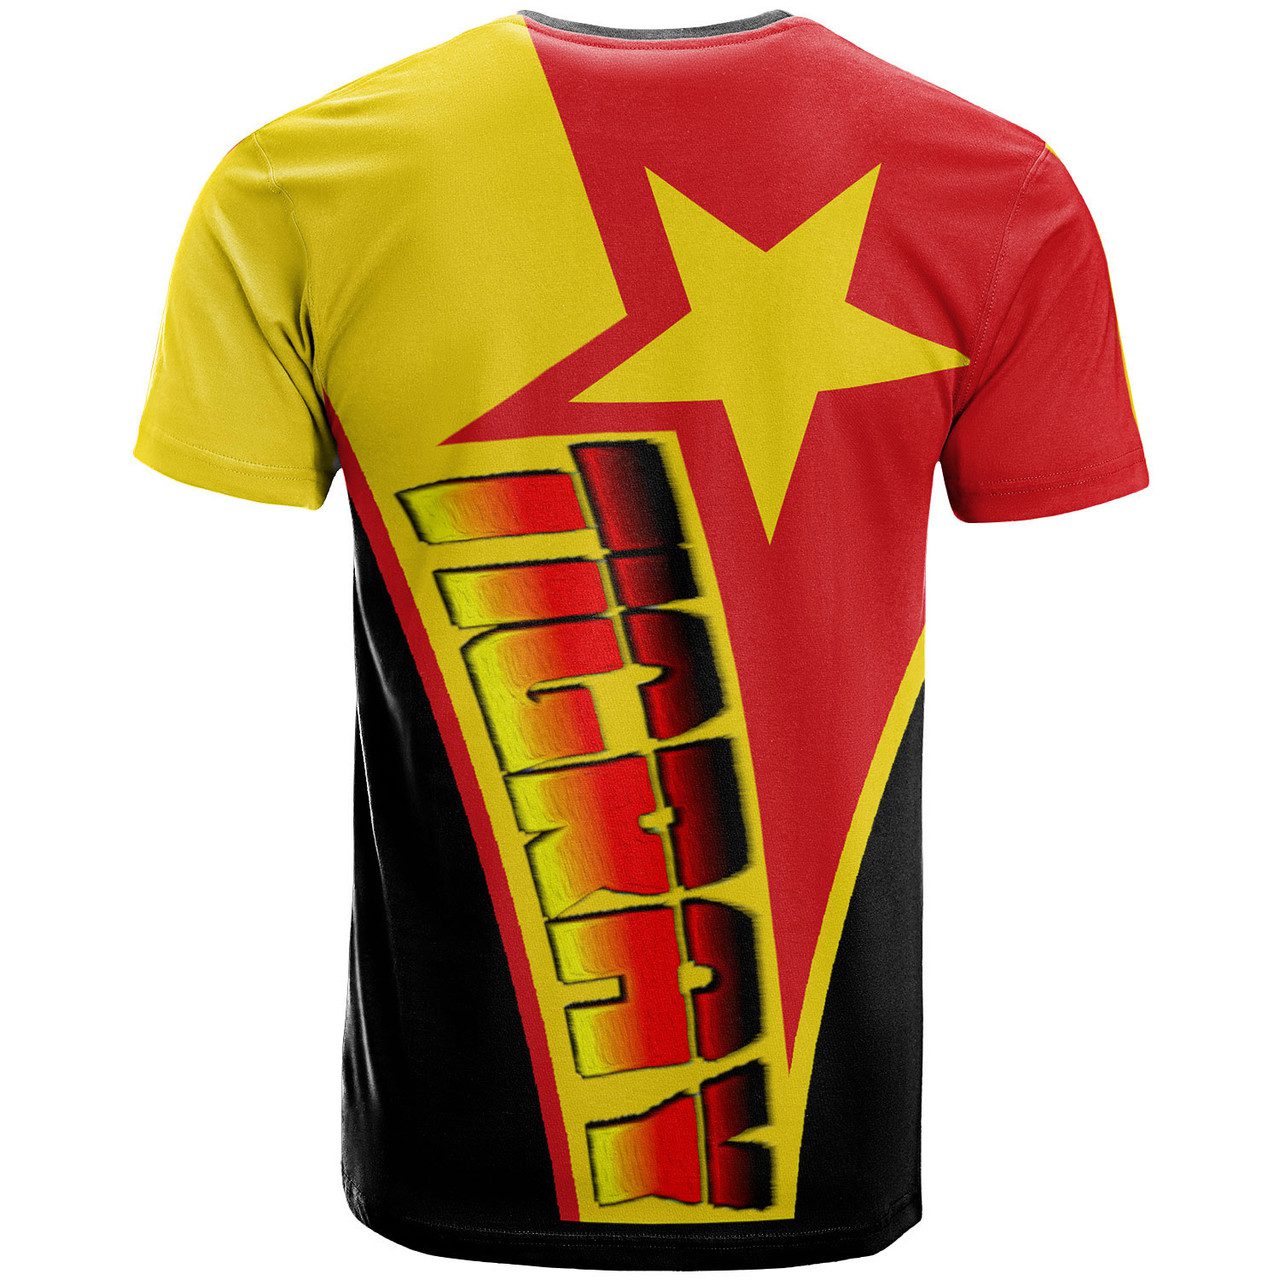 Tigray T-Shirt – Africa Tigray Pride Style T-Shirt